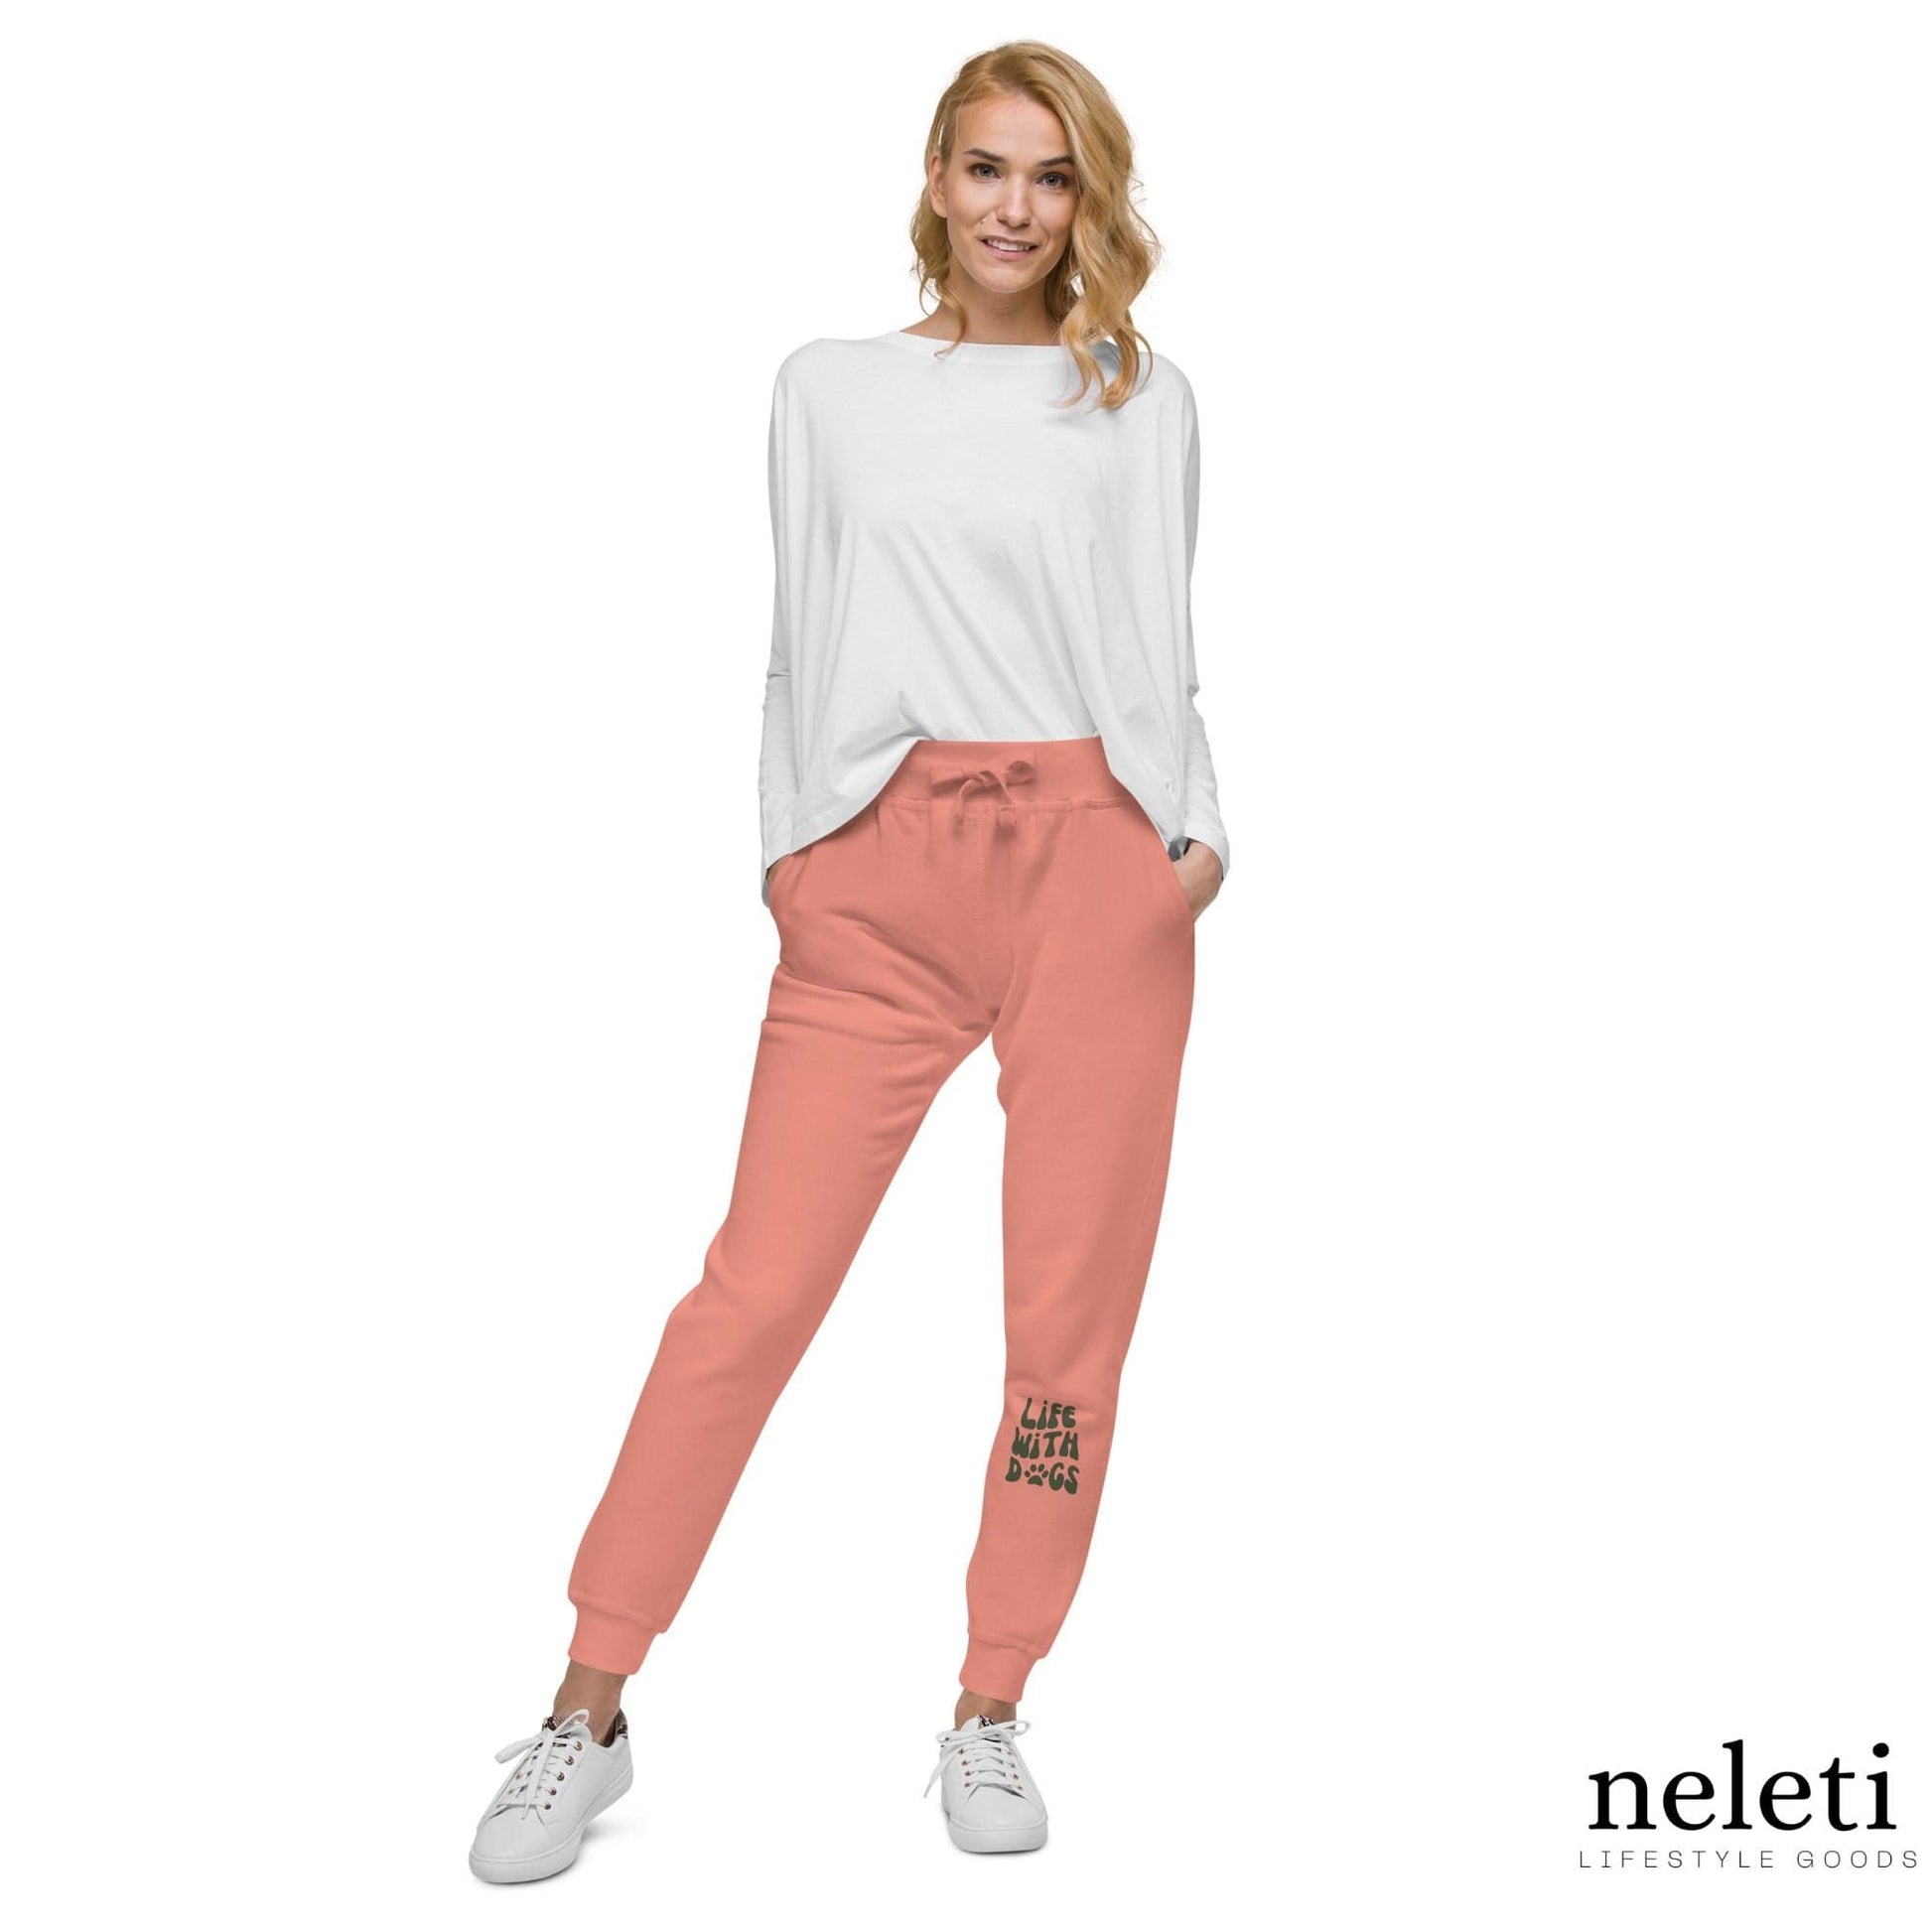 neleti.com-Dusty-Rose-Fleece-Sweatpants